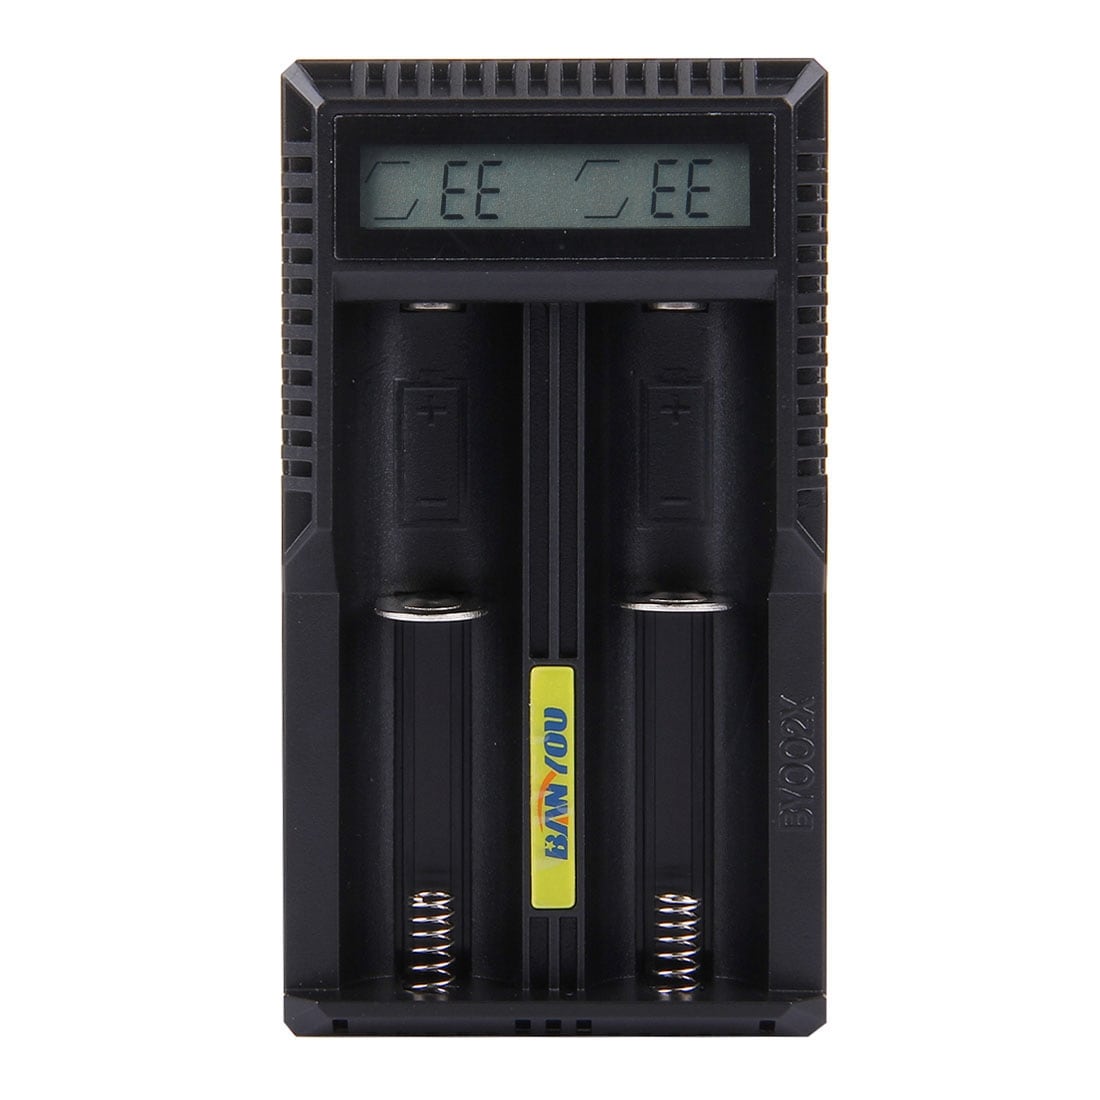 USB Smart Batteriladdare  18650 / 18490 / 18350 / 17670 / 17500 / 16340 / 14500 / 10440 batteri - Lcd display